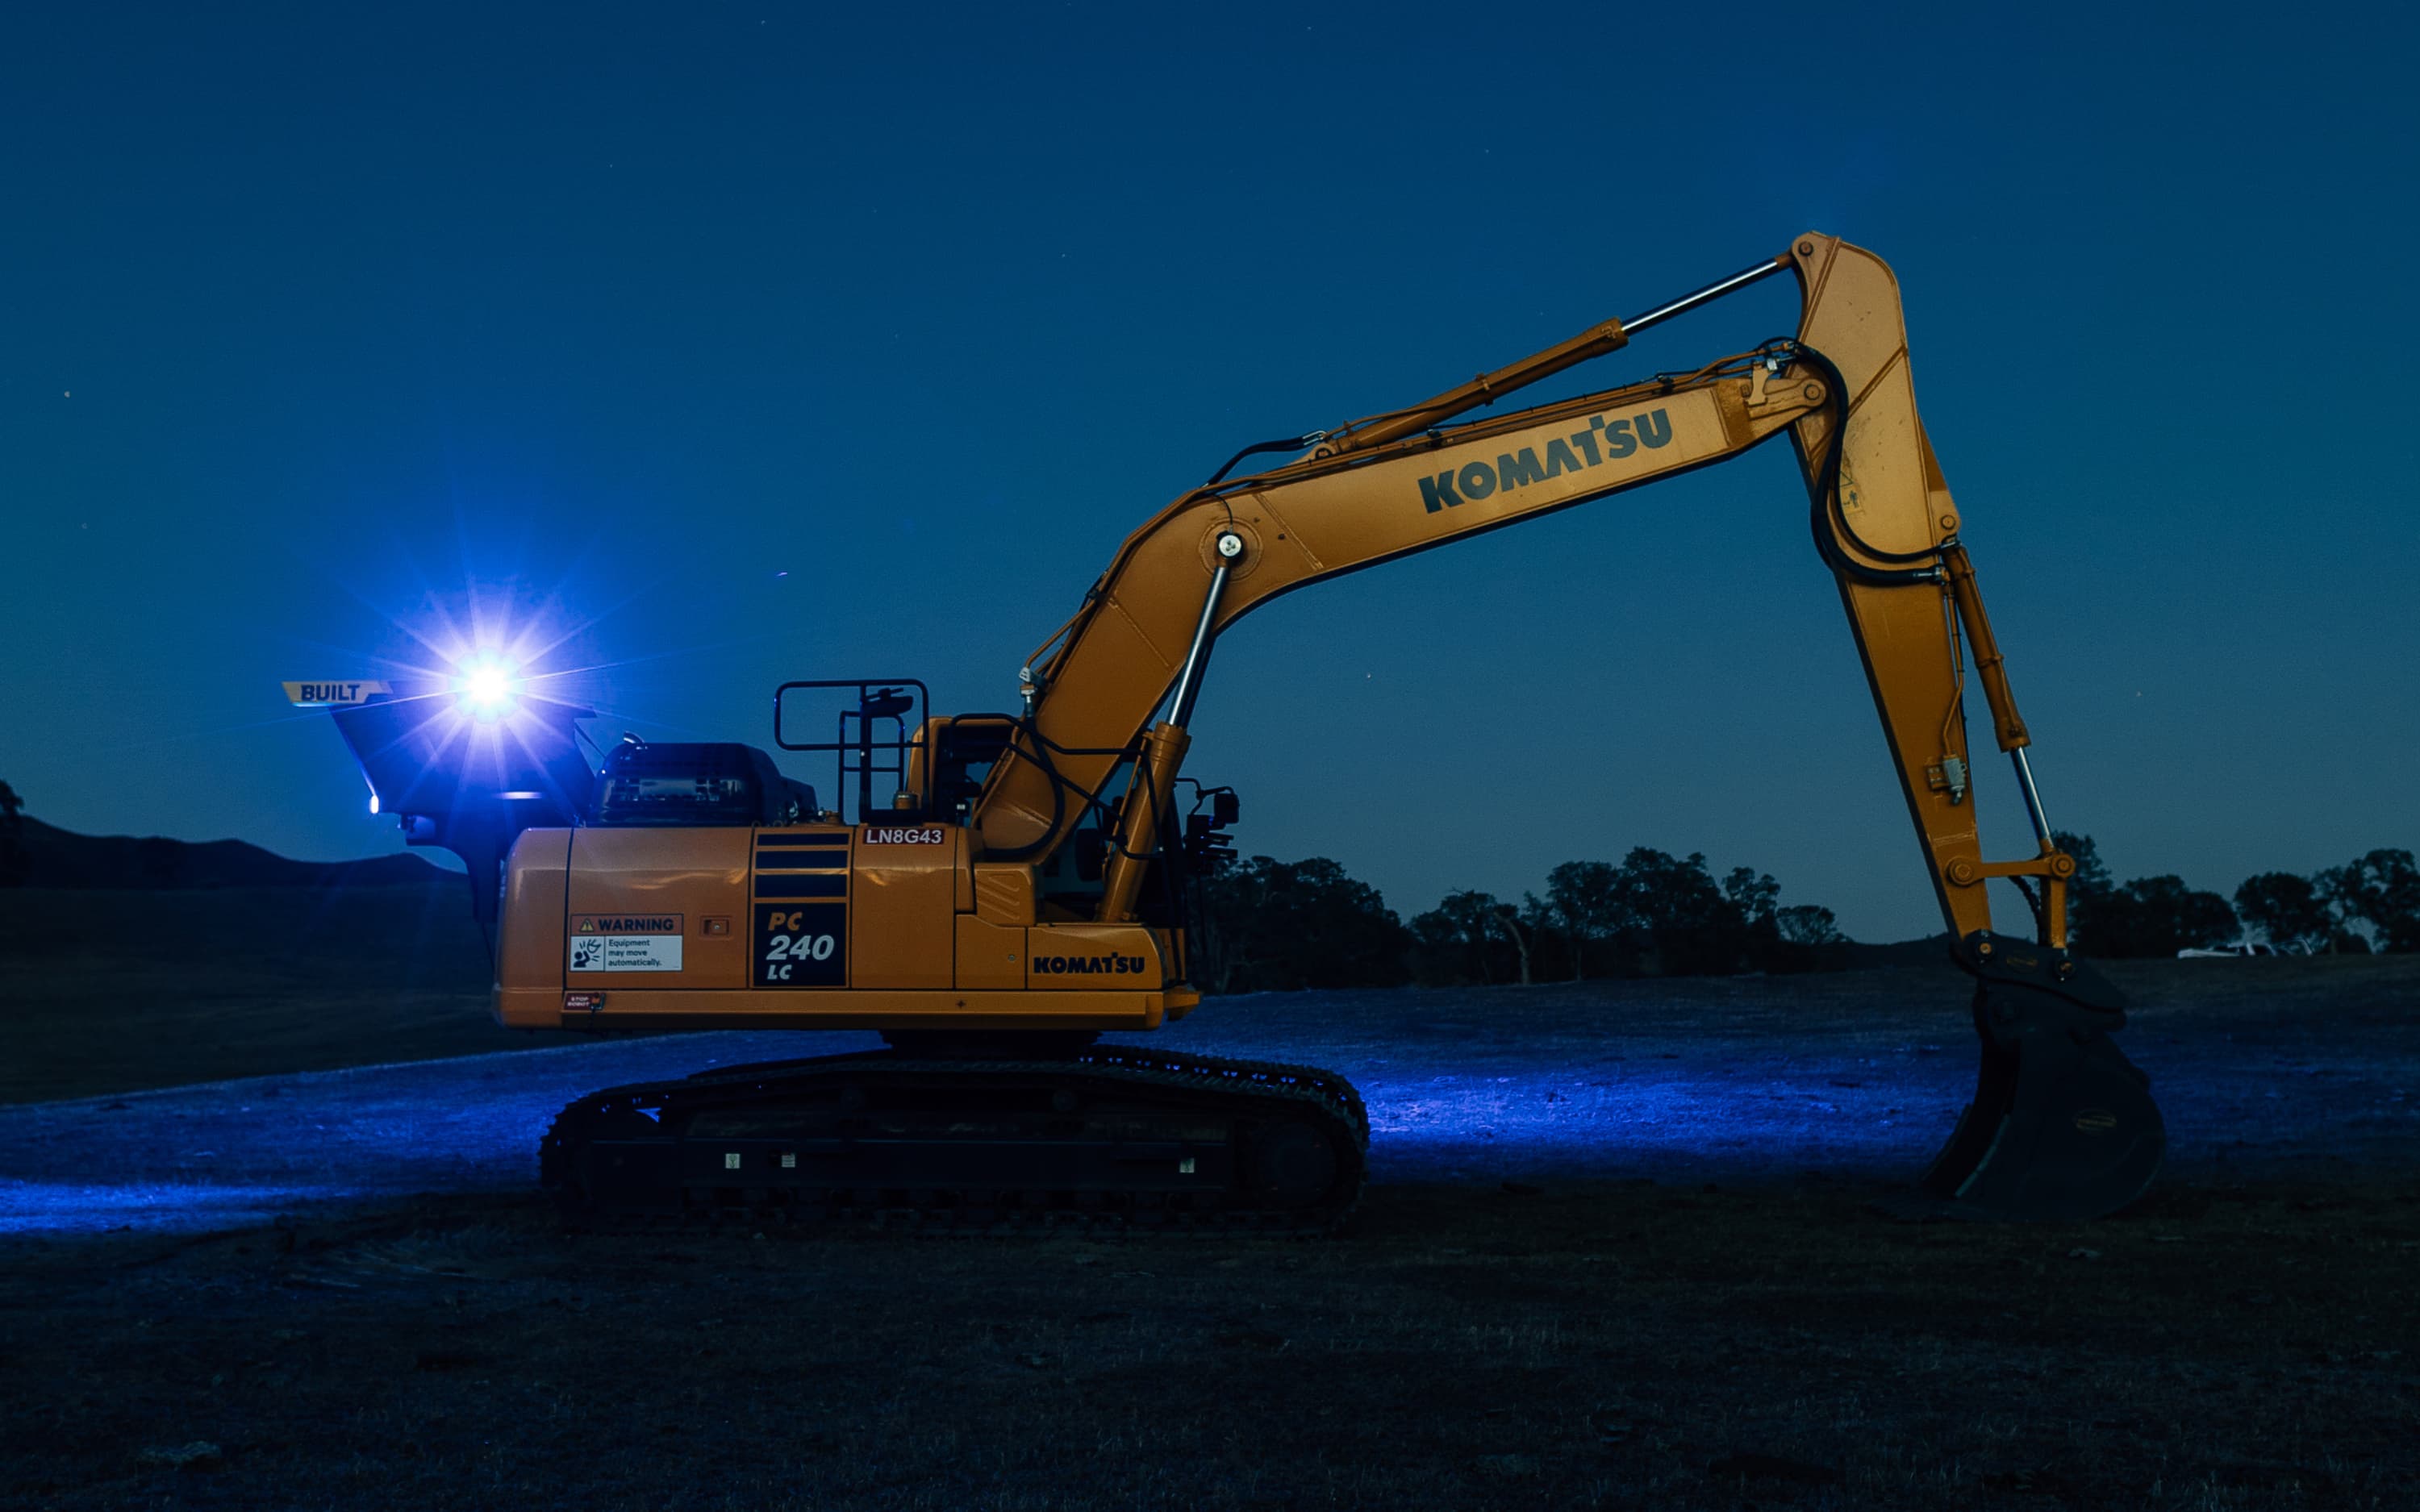 Nighttime beaming light on excavator